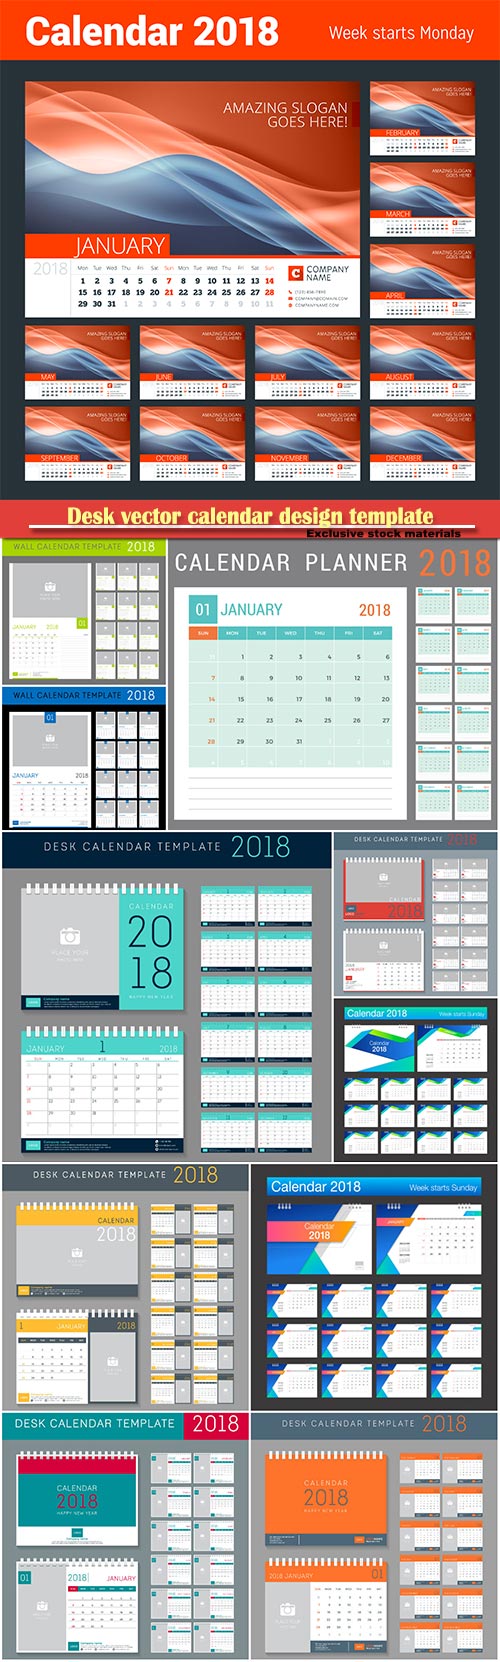 Desk vector calendar design template for 2018 year # 12